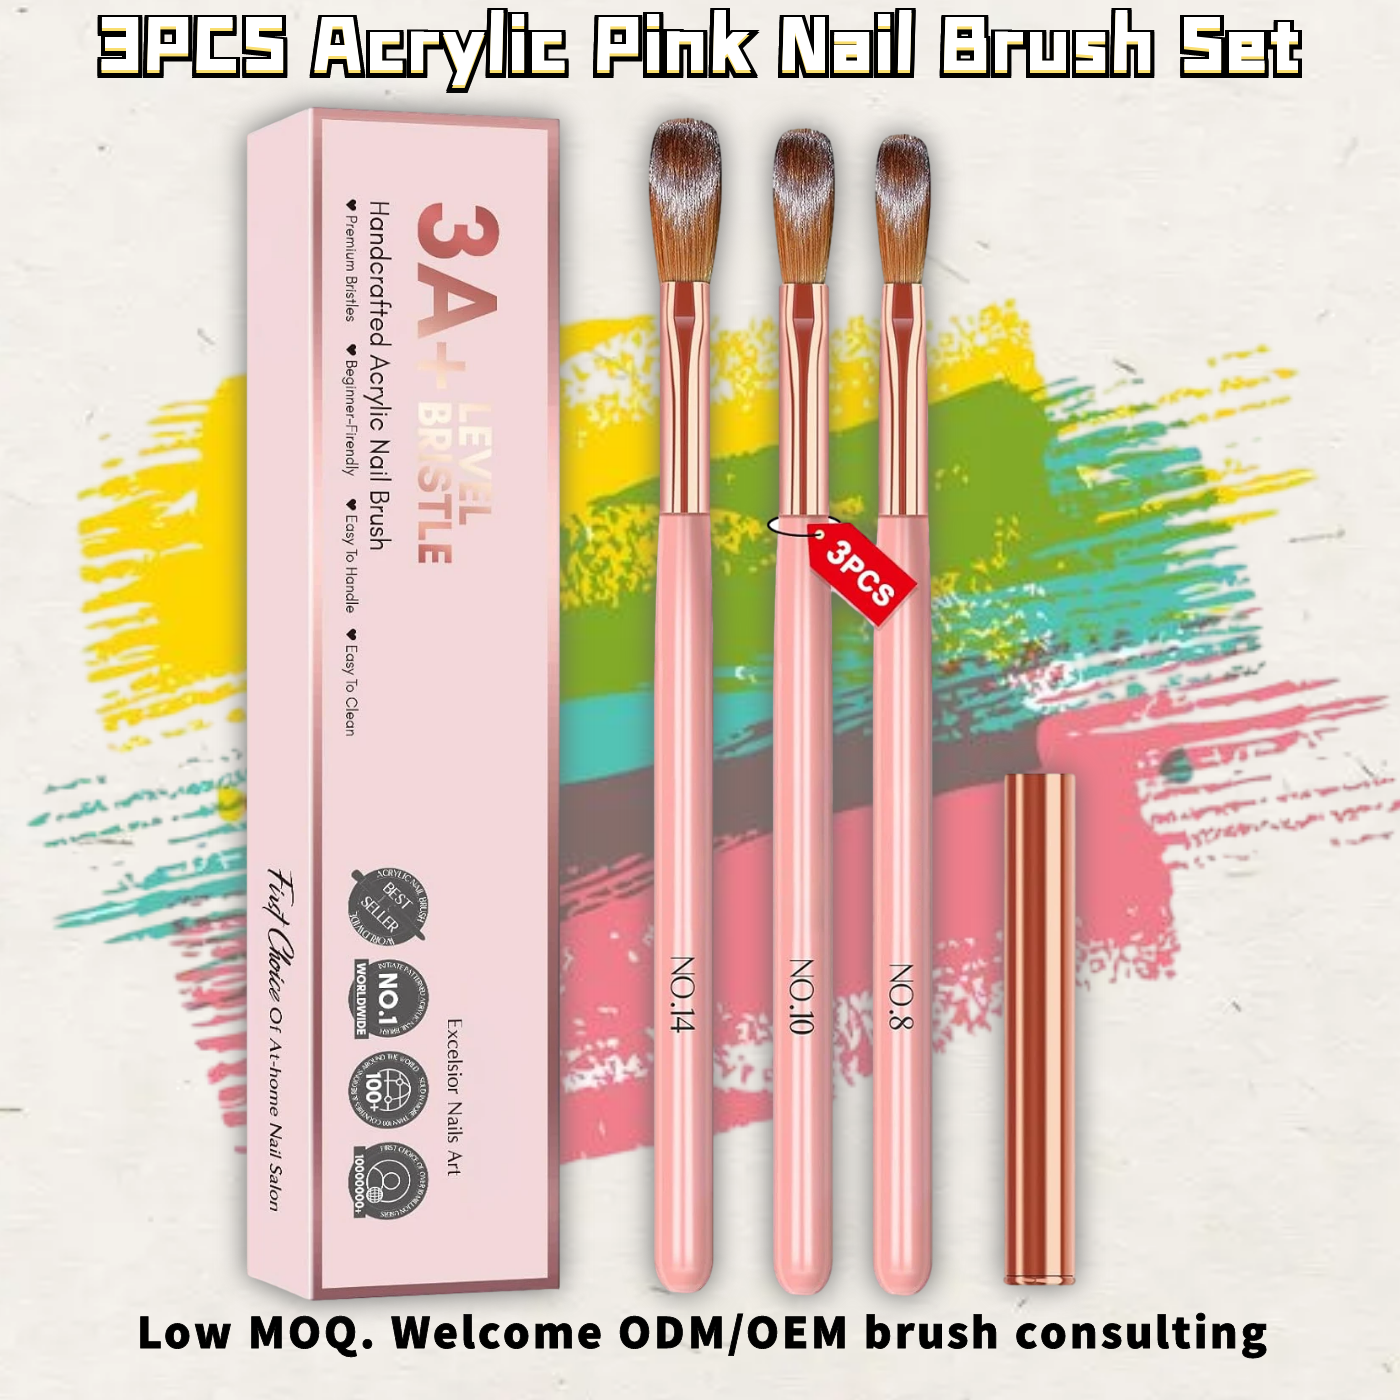 3PCS Acrylic Pink Nail Brush Set